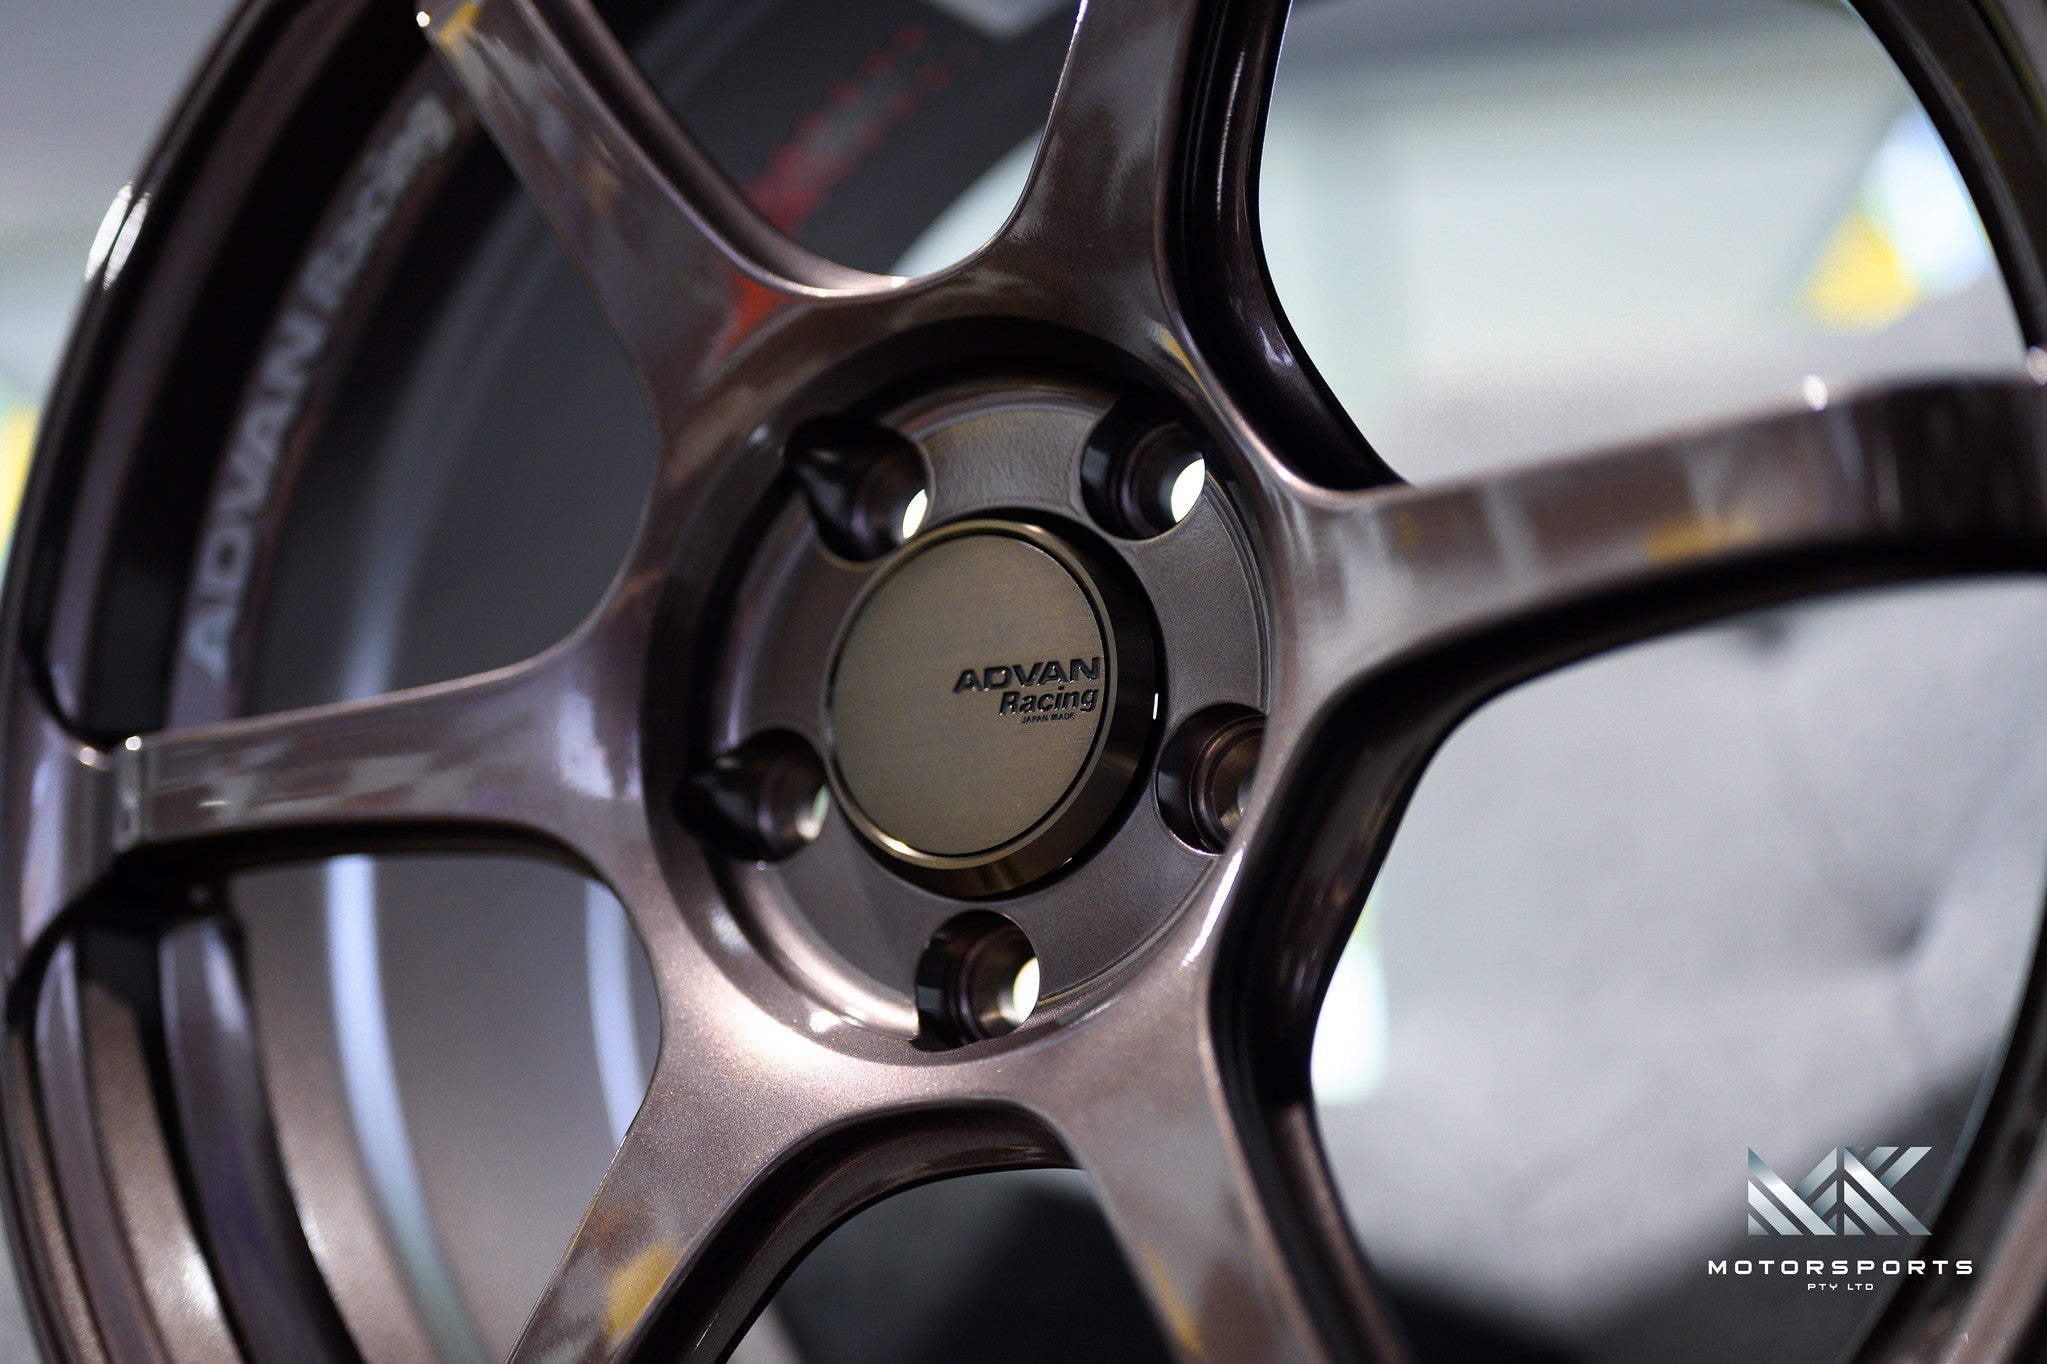 Advan Racing RG-4 - Premium Wheels from Advan Racing - From just $3590.00! Shop now at MK MOTORSPORTS